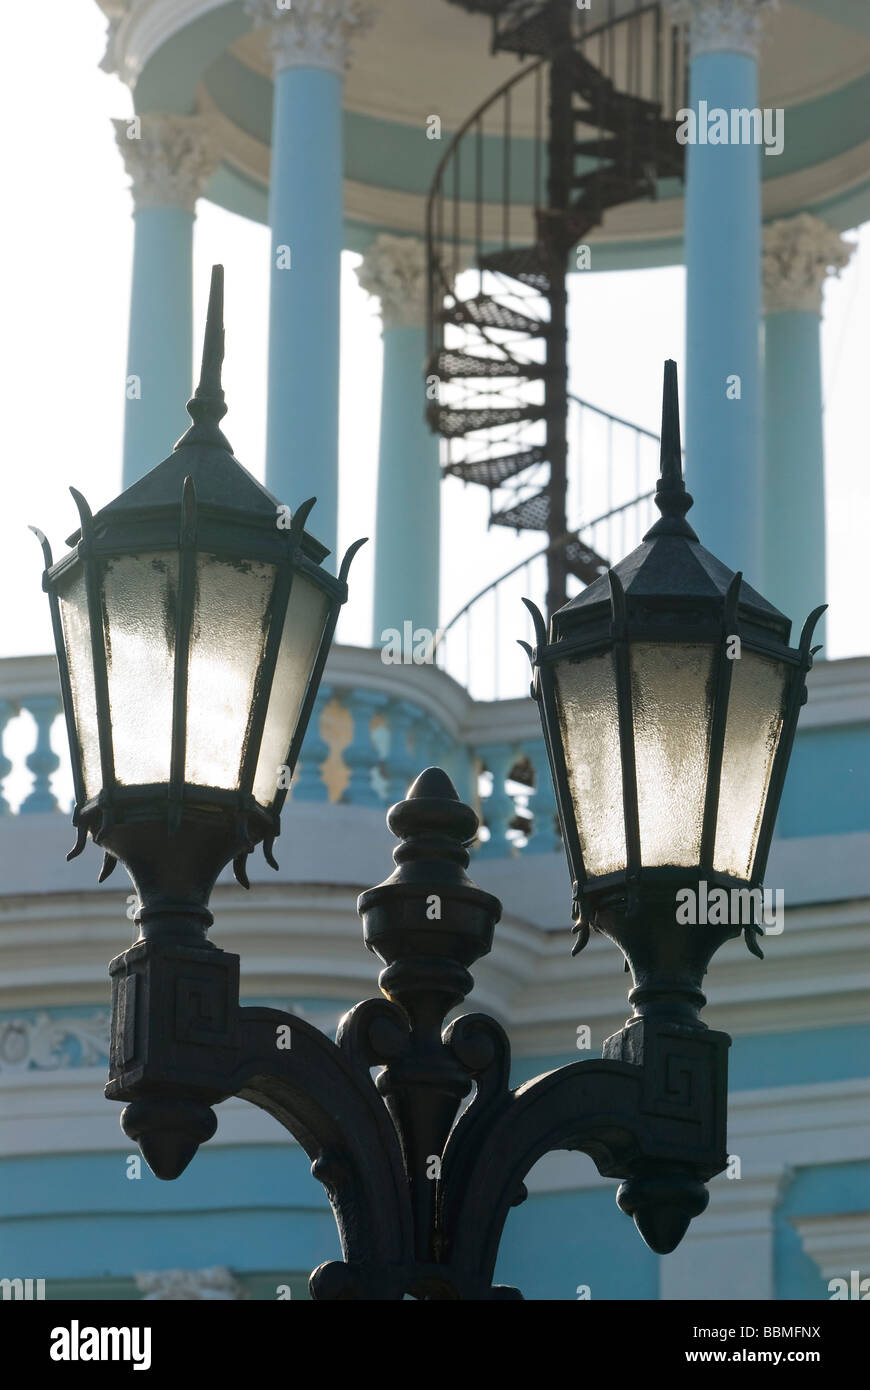 Cuba, Cienfuegos. Street lamps in front of Casa de Cultura Benjamin Duarte, Jose Marti Plaza Stock Photo